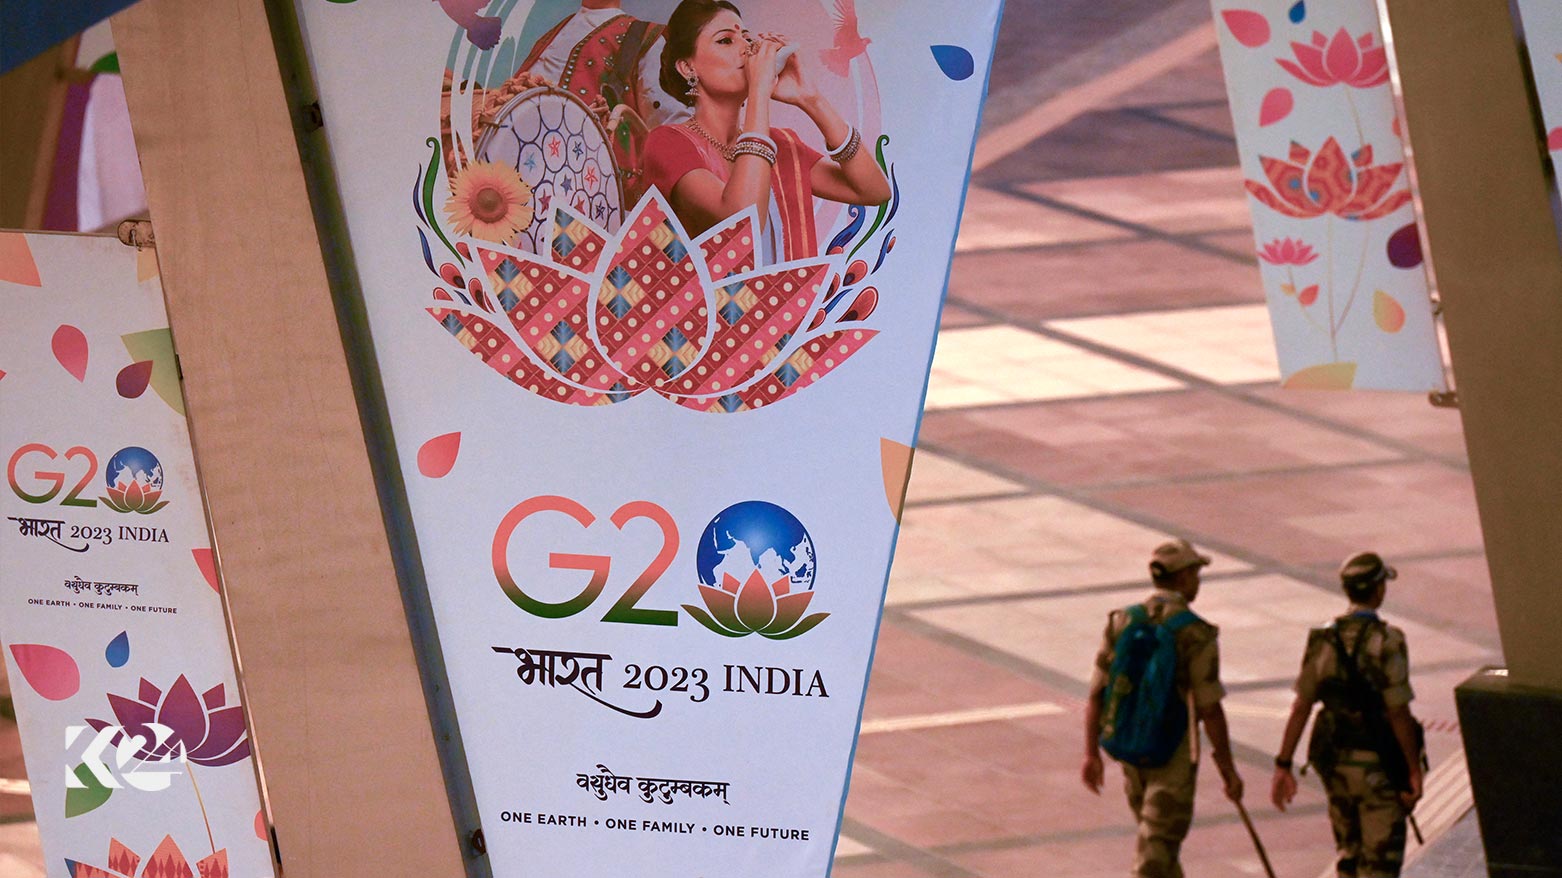 لوتکەی 18ـی گرووپی G20 لە هیندستان بەڕێوەدەچێت